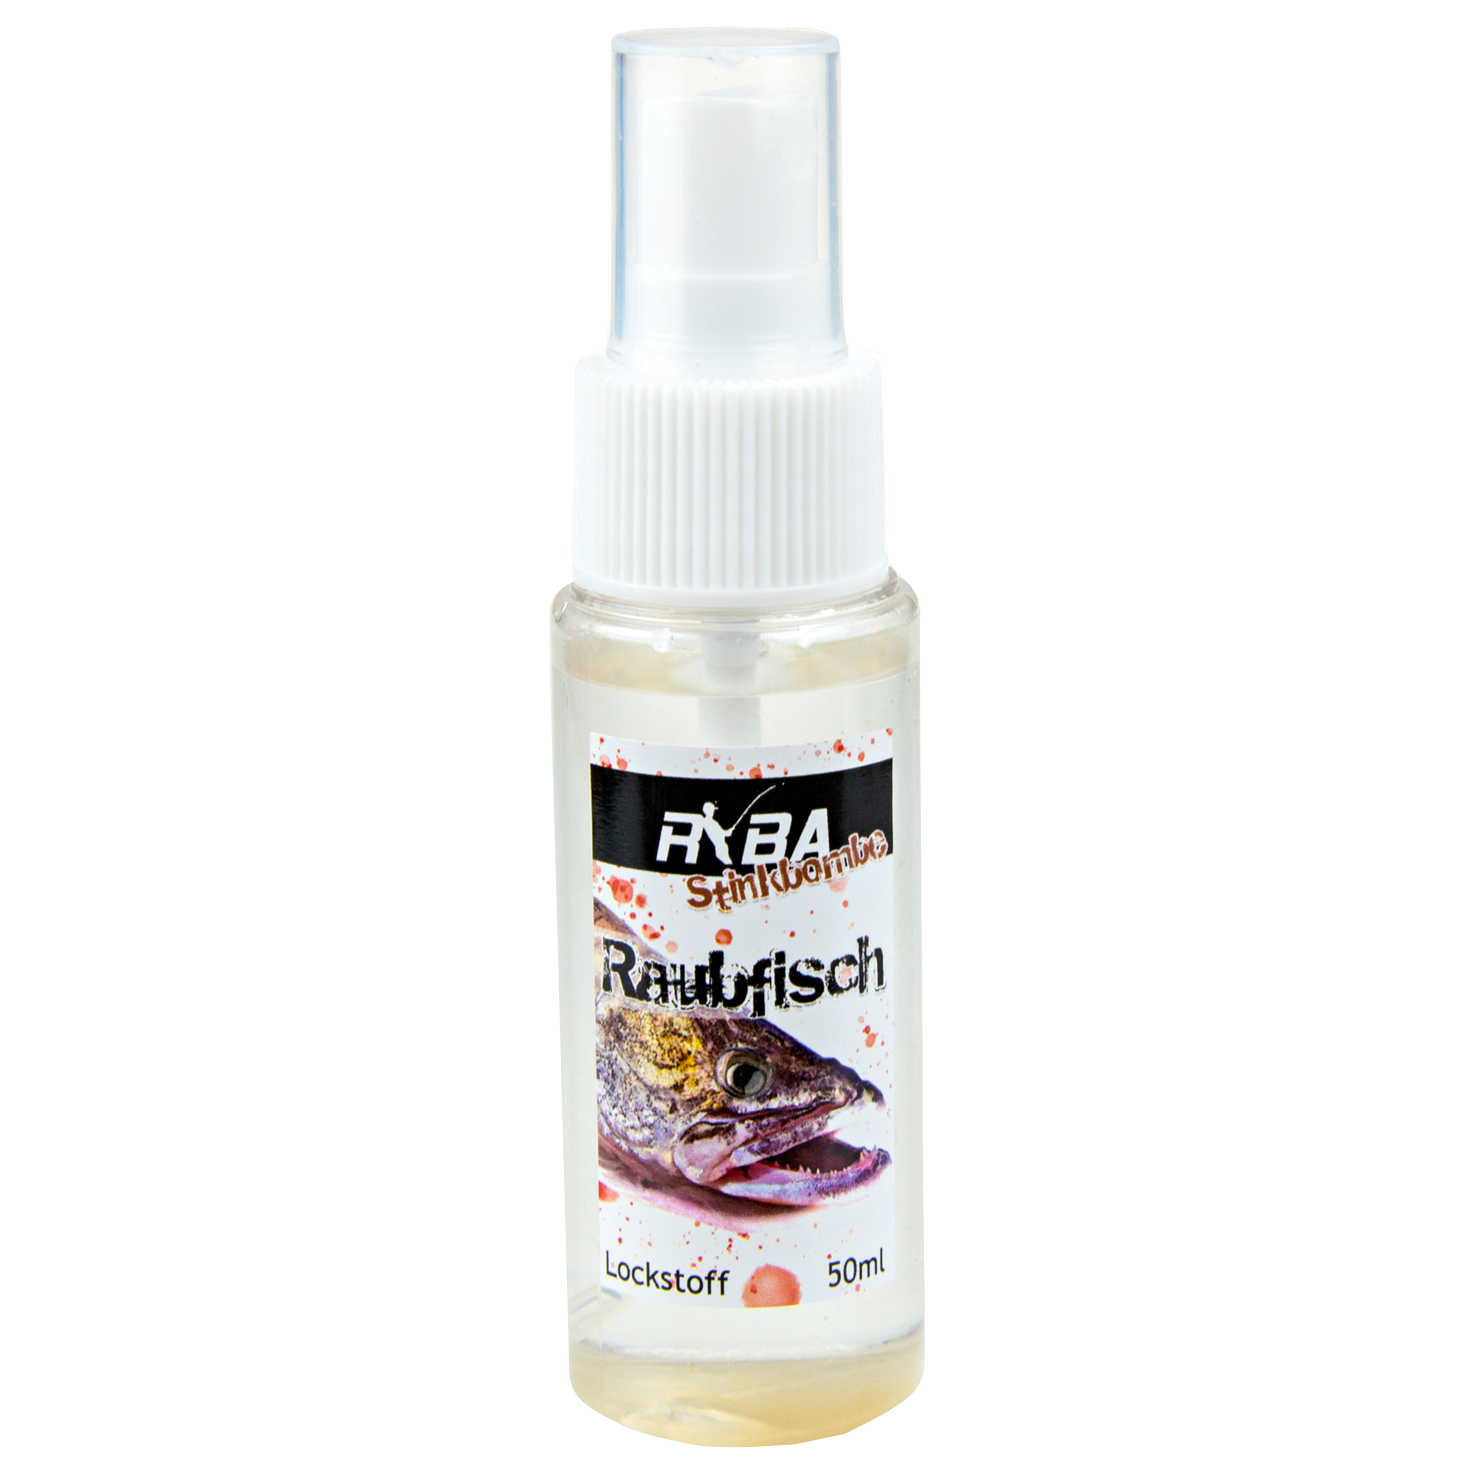 Ryba Attractant Spray stinkbomb (predatory fish/garlic) 